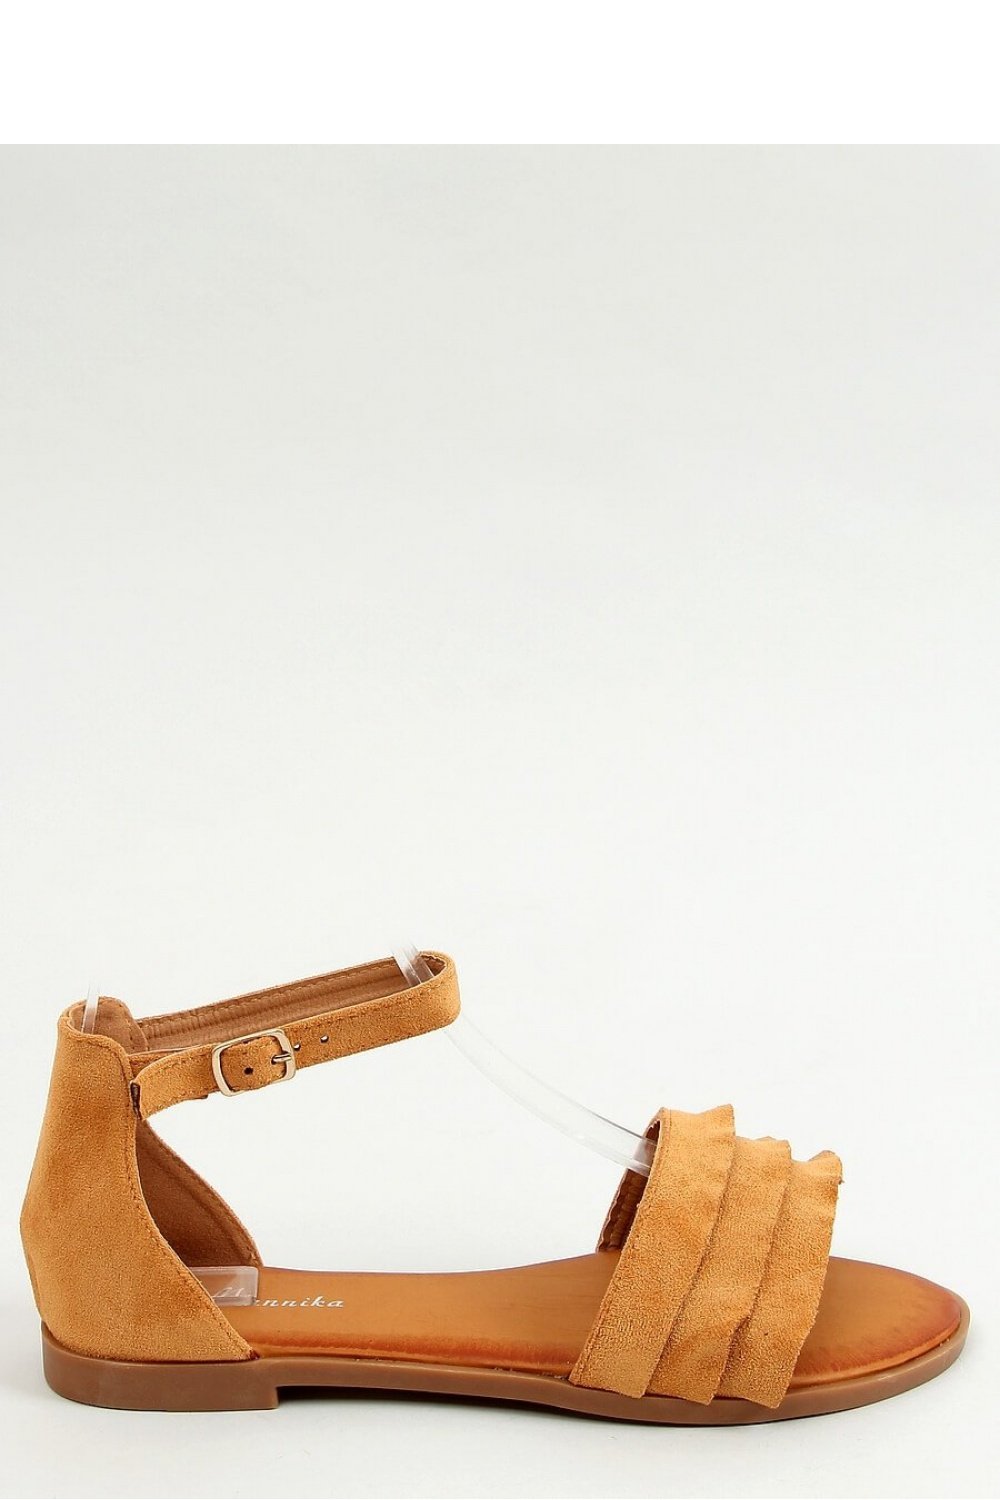 Sandals model 156332 Inello Posh Styles Apparel